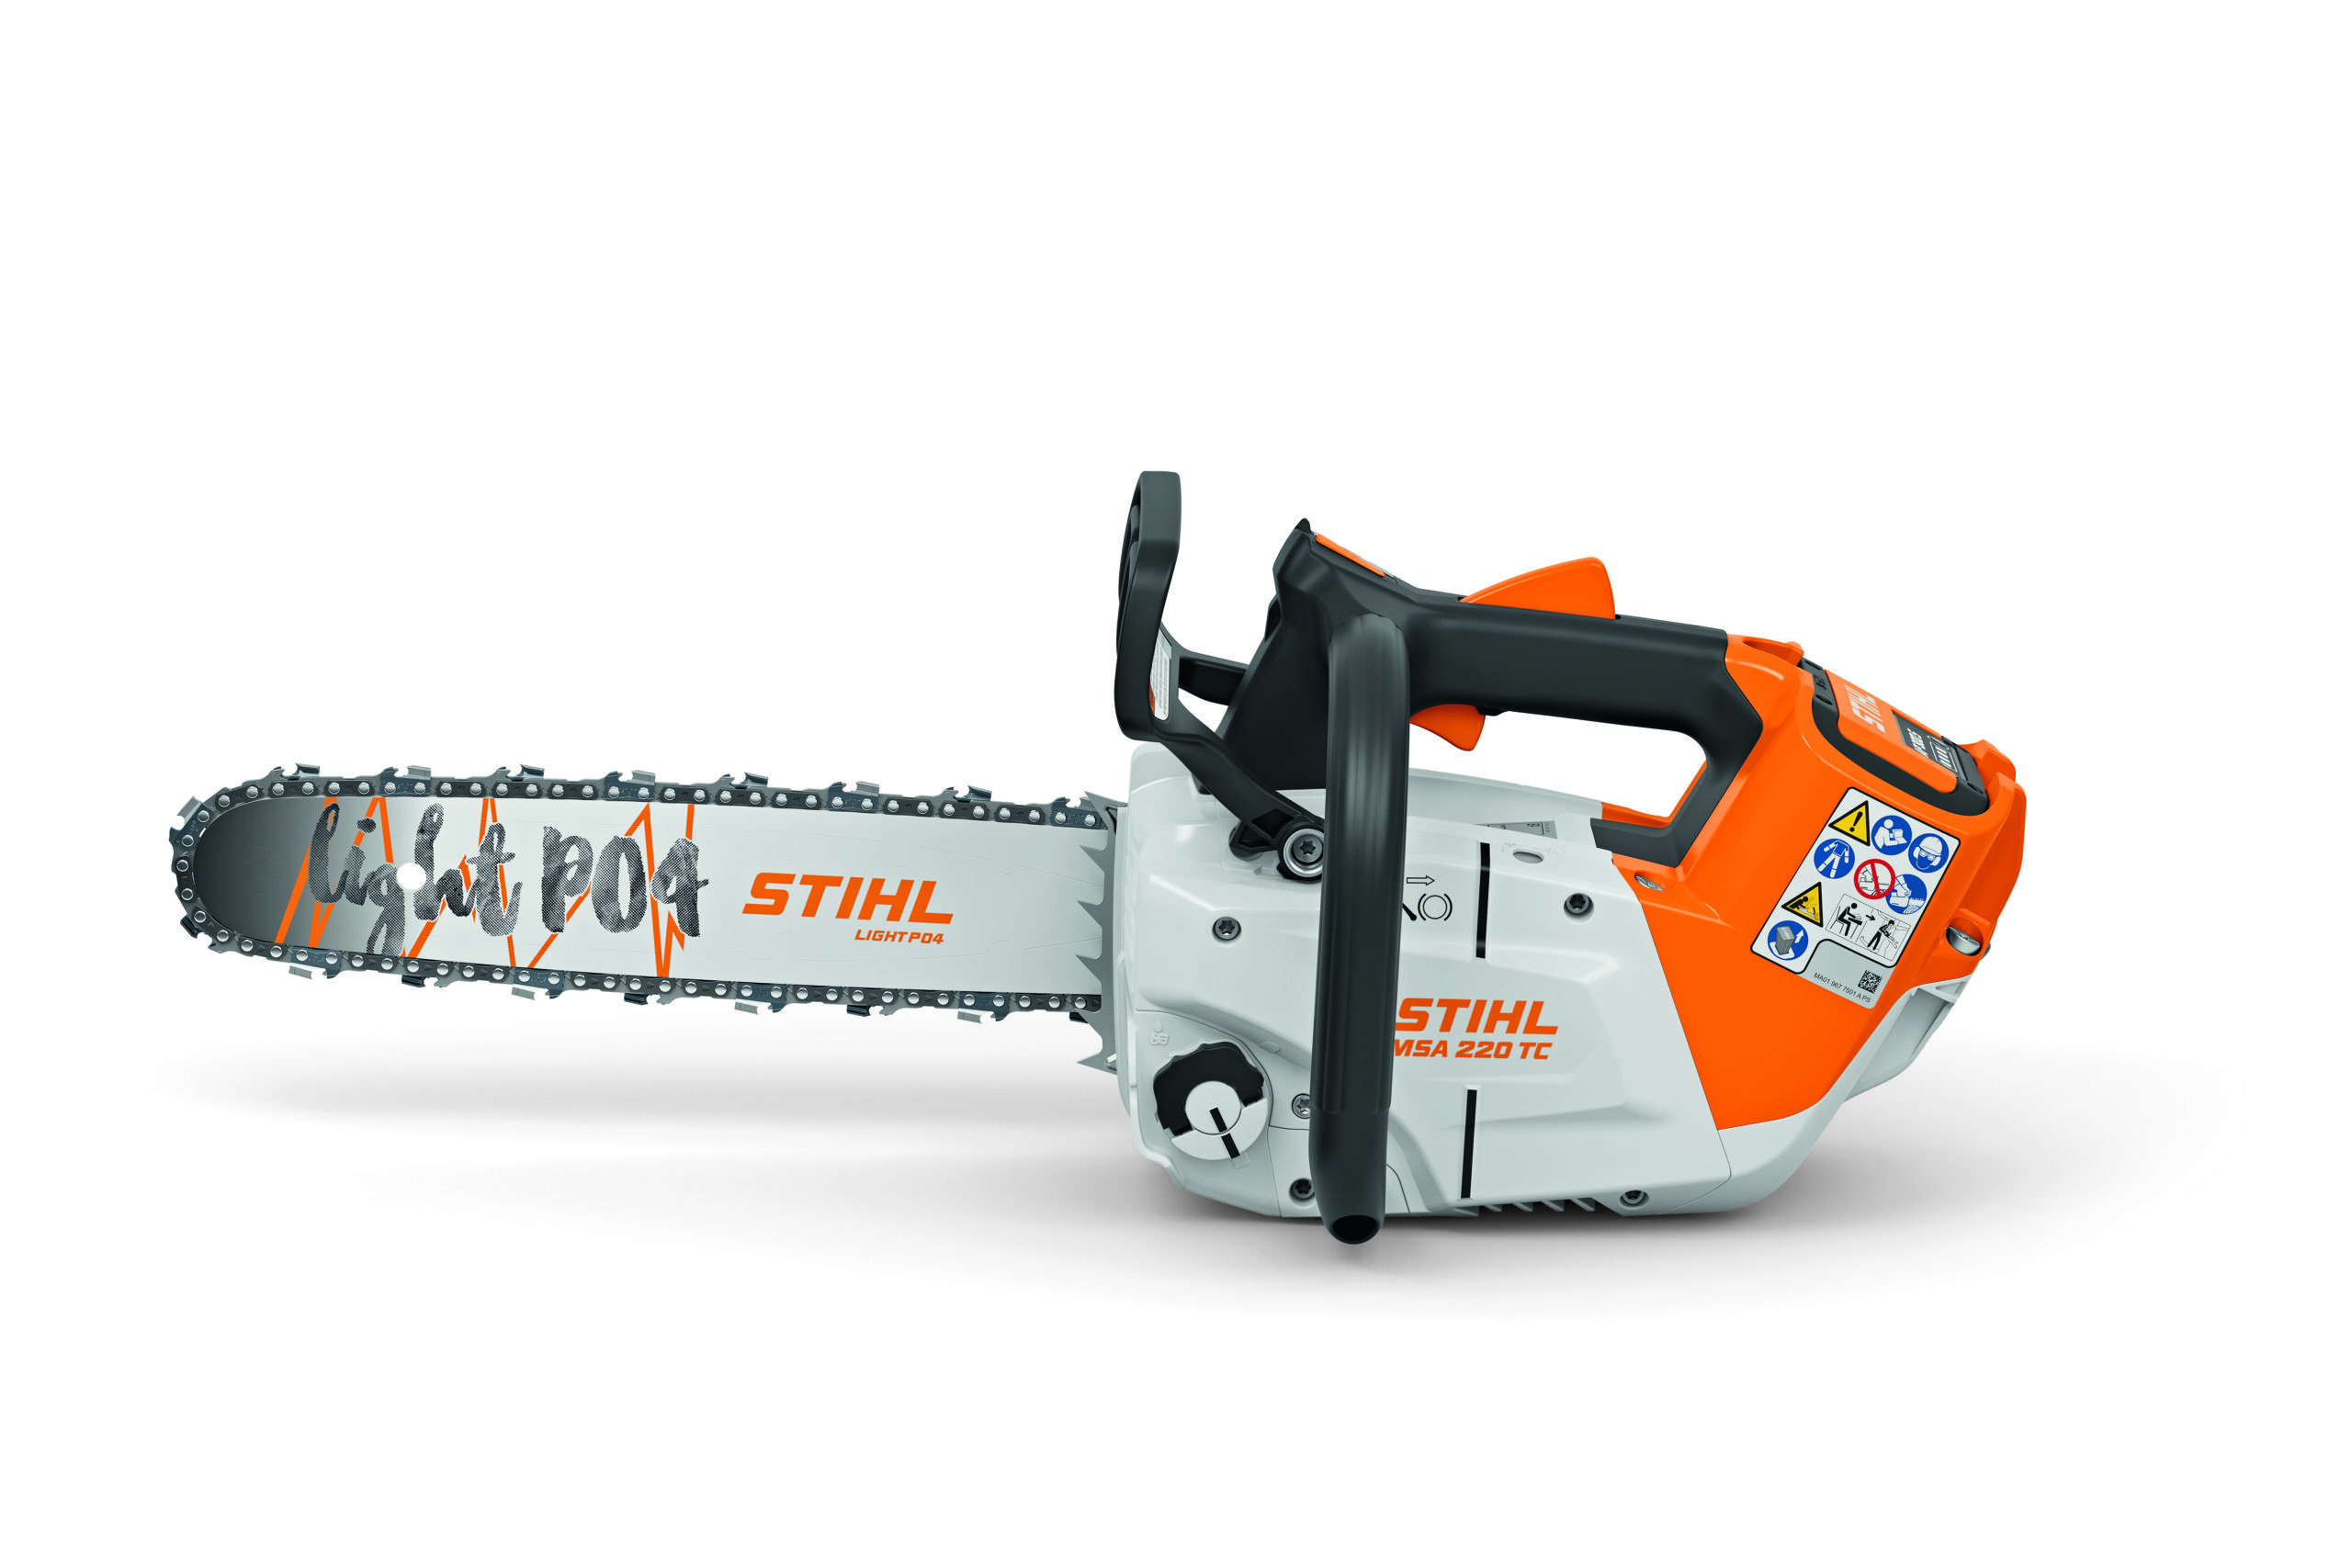 Mareo Buen sentimiento tallarines Stihl MSA 220 TC-O battery-powered chain saw - Tree Care Industry Magazine